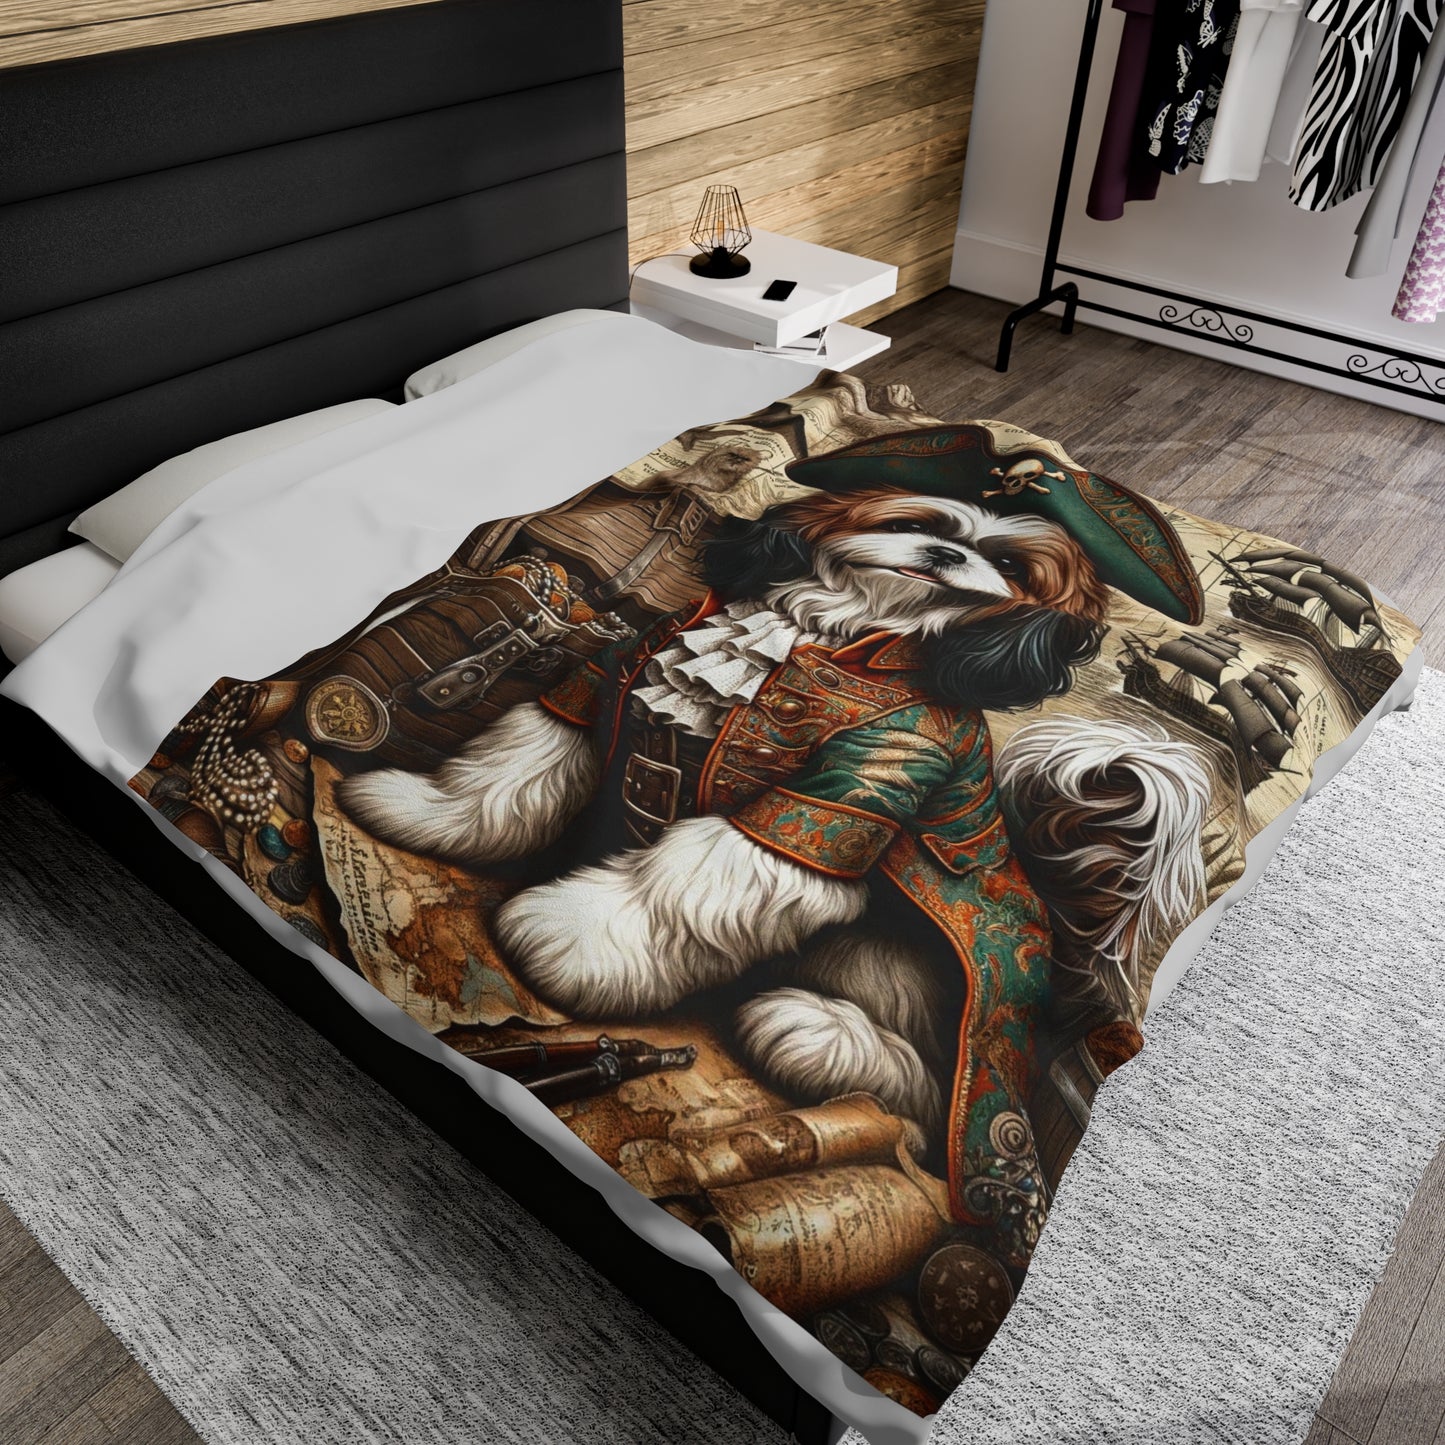 Cute  Shih Tzu Dog Pirate-Themed Velveteen Plush Blanket -  Soft Throw,  Unique Dog Print Design - Cozy Home Decor & Gift Idea"